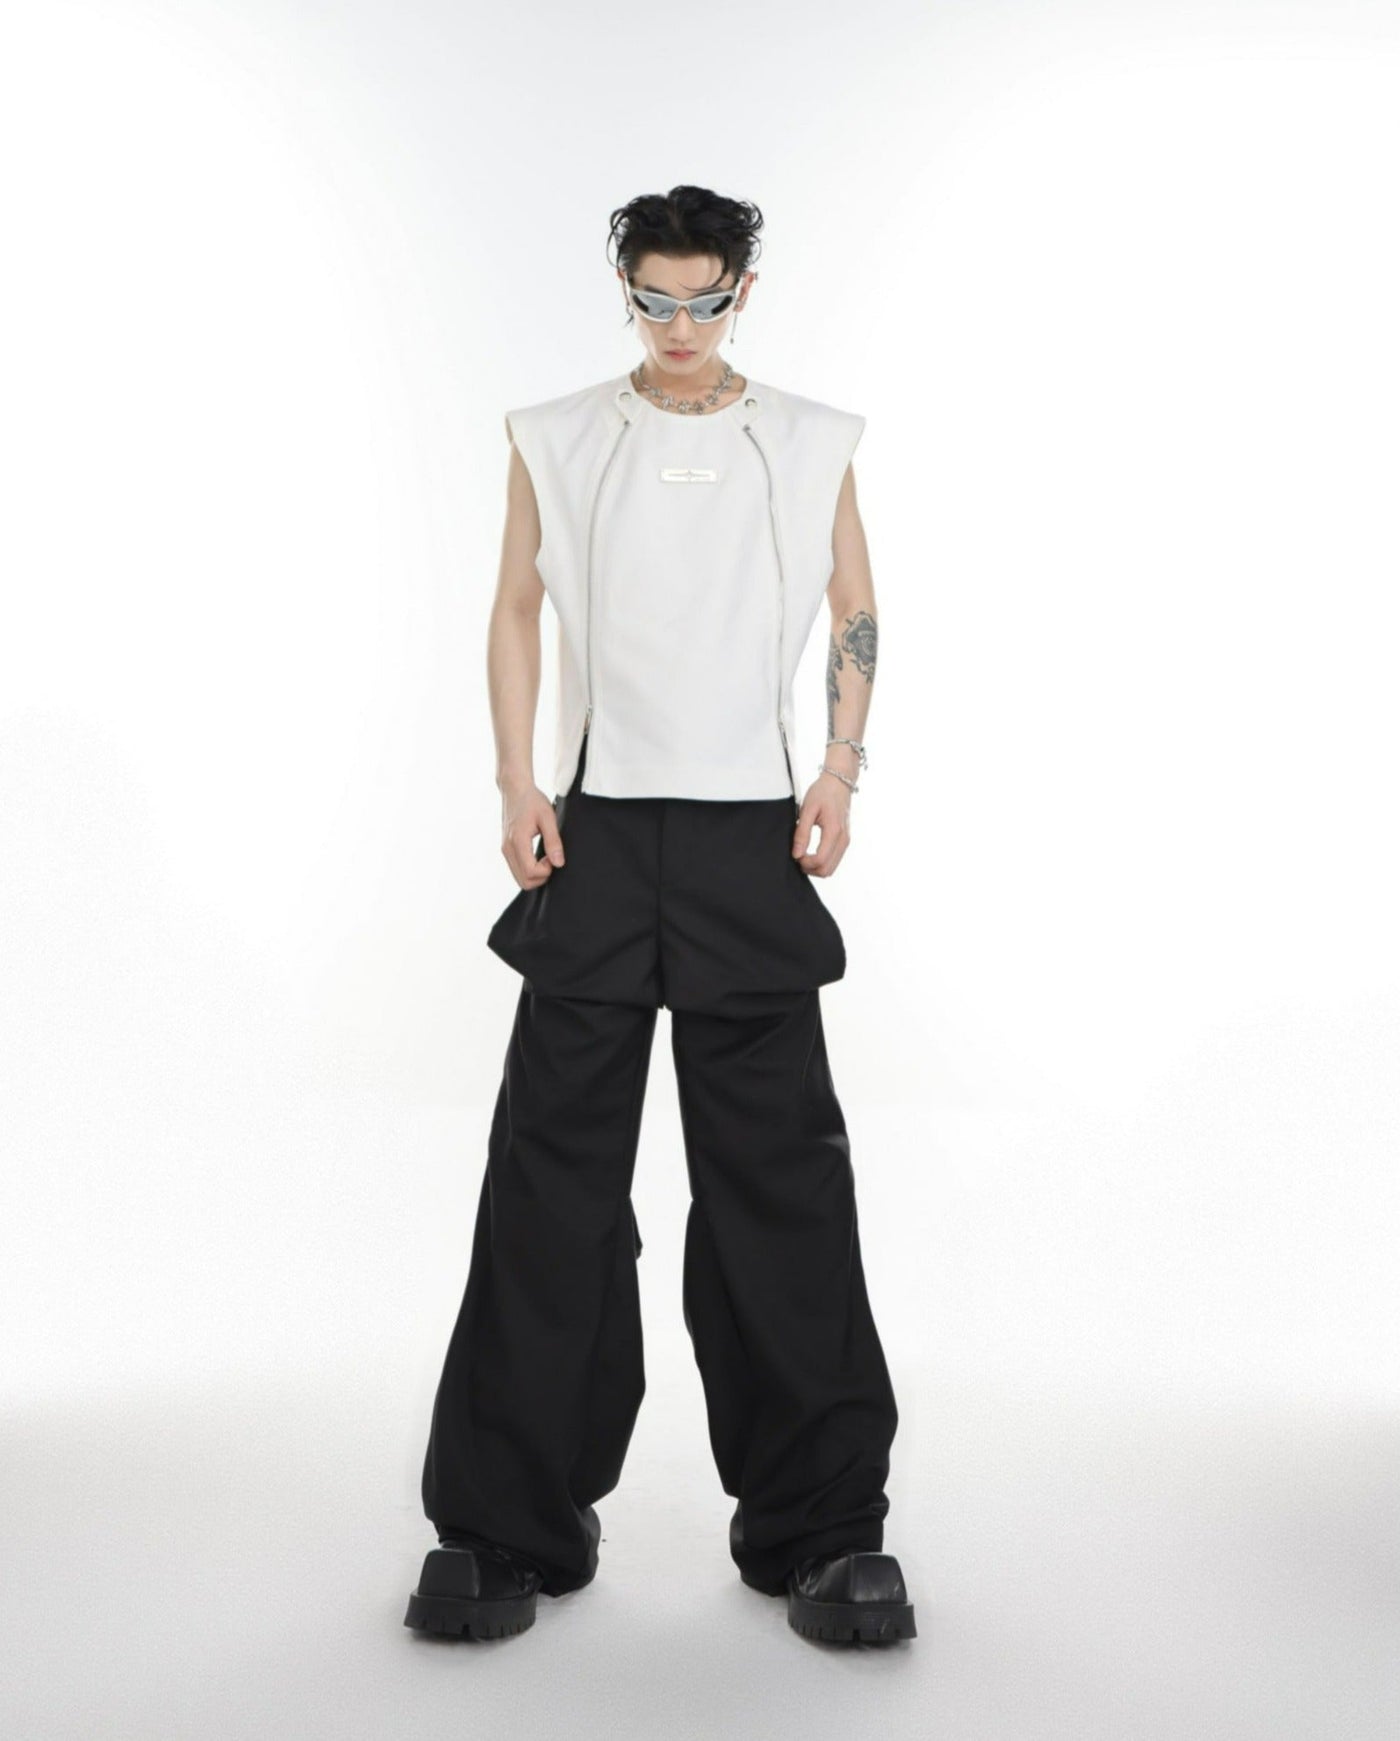 Double Zip Metal Sleeveless T-Shirt Korean Street Fashion T-Shirt By Argue Culture Shop Online at OH Vault